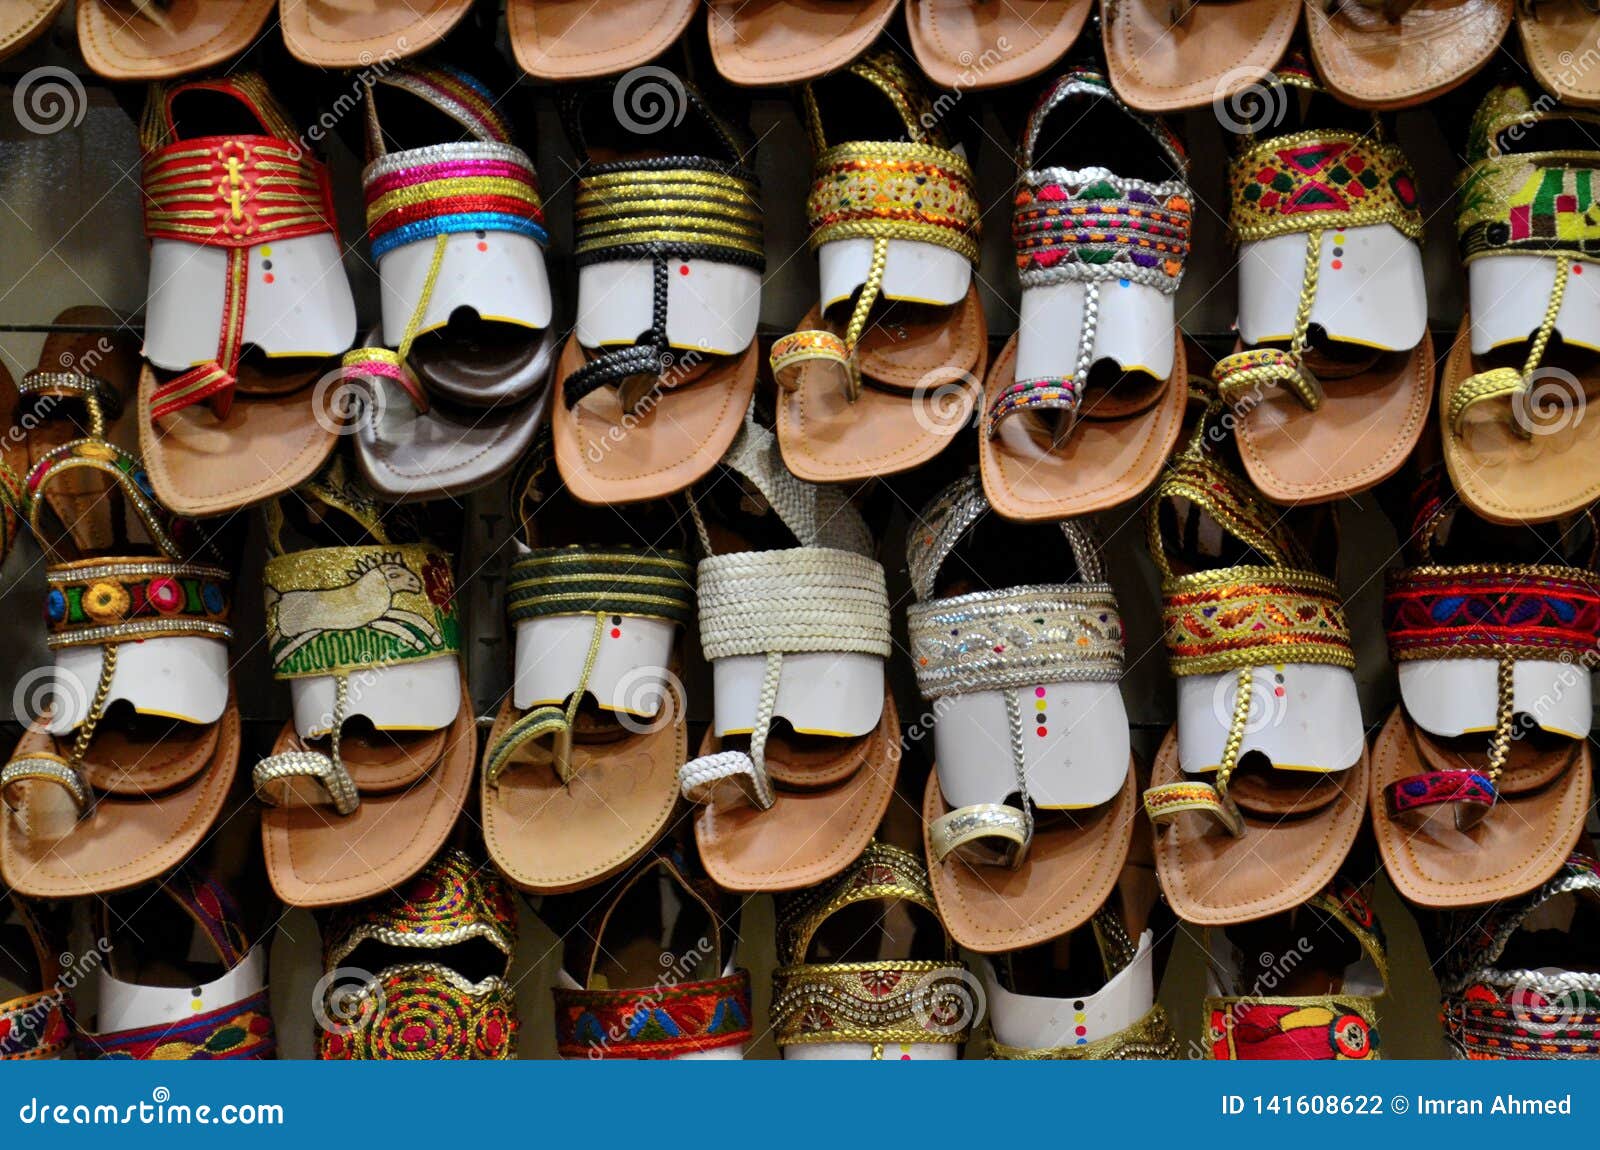 pakistani shoes